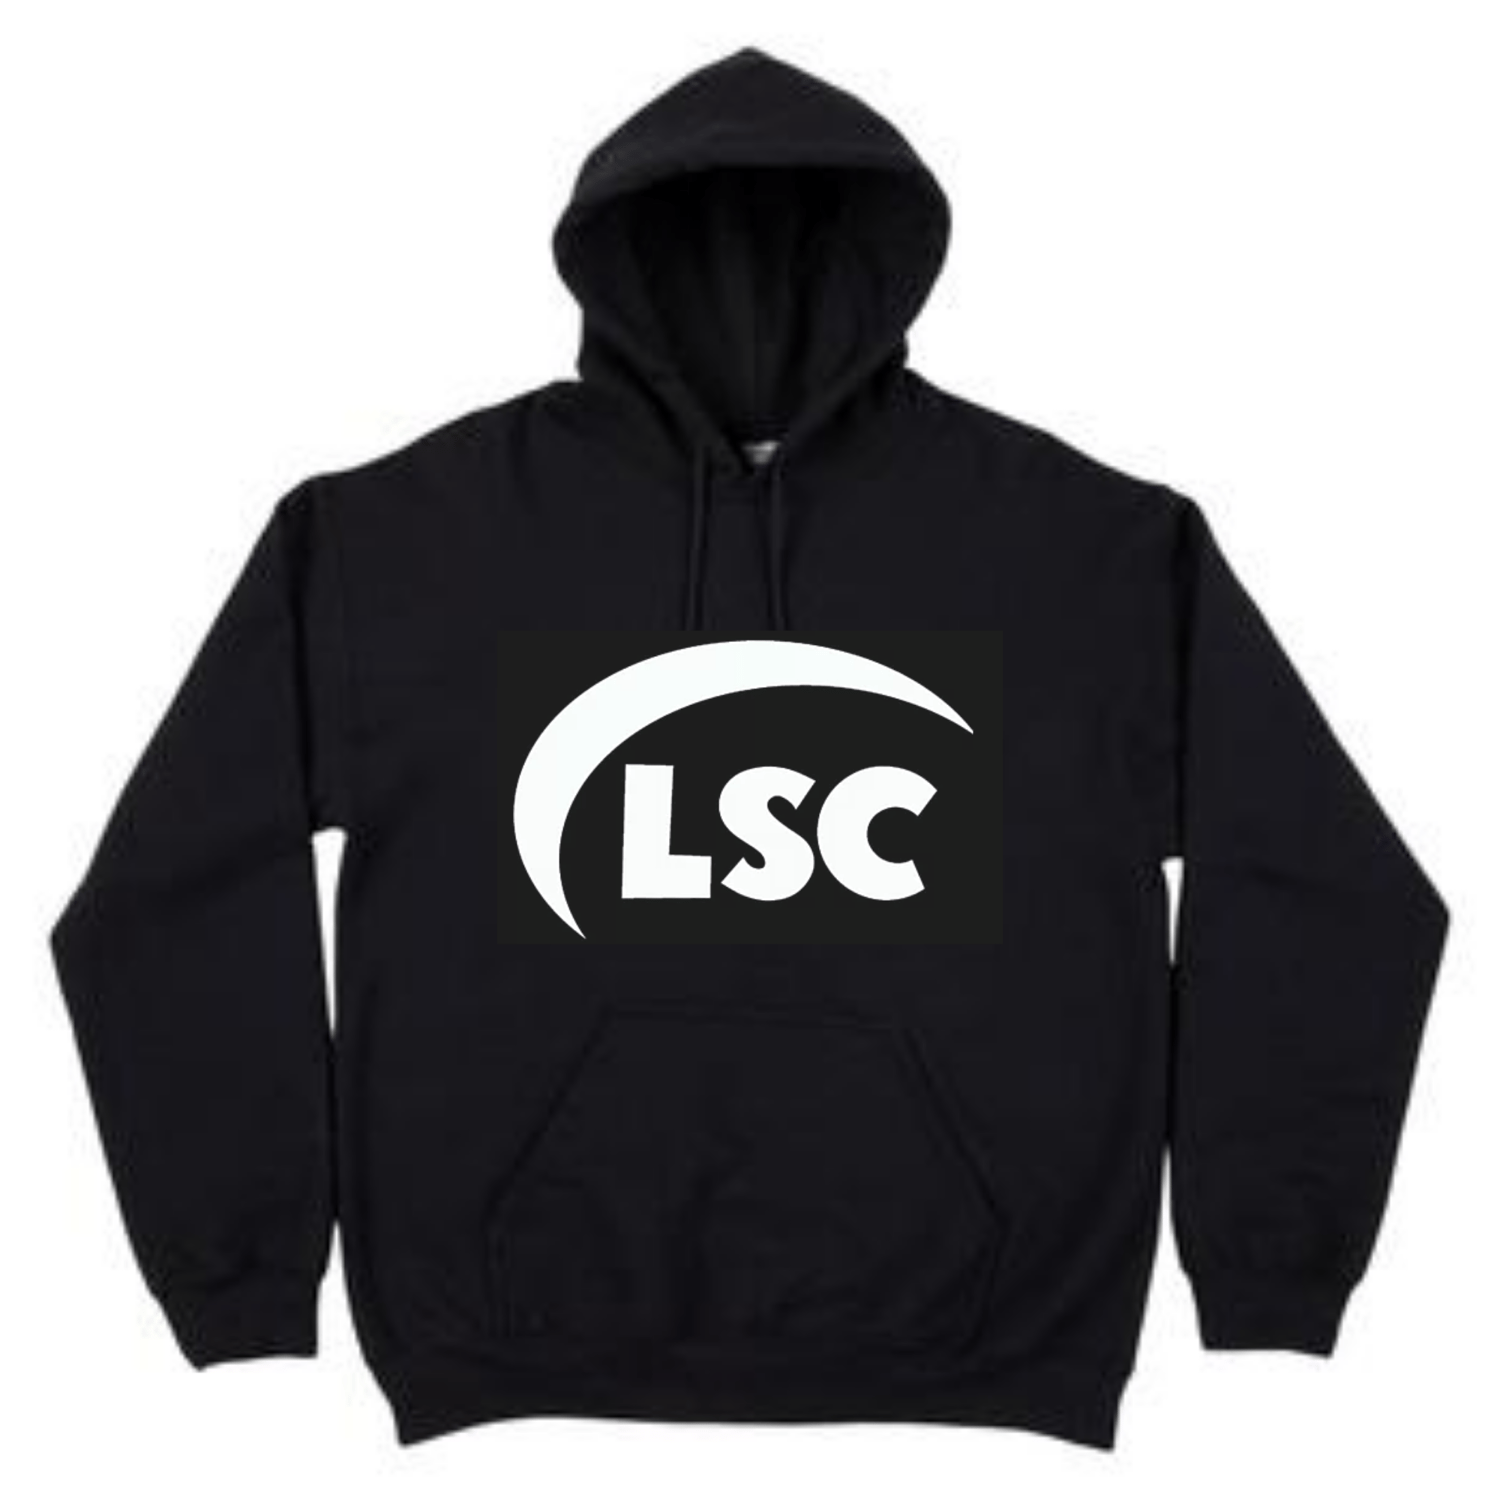 LSC Classic Hoodie | Shop LSC Limited Liability Corporation